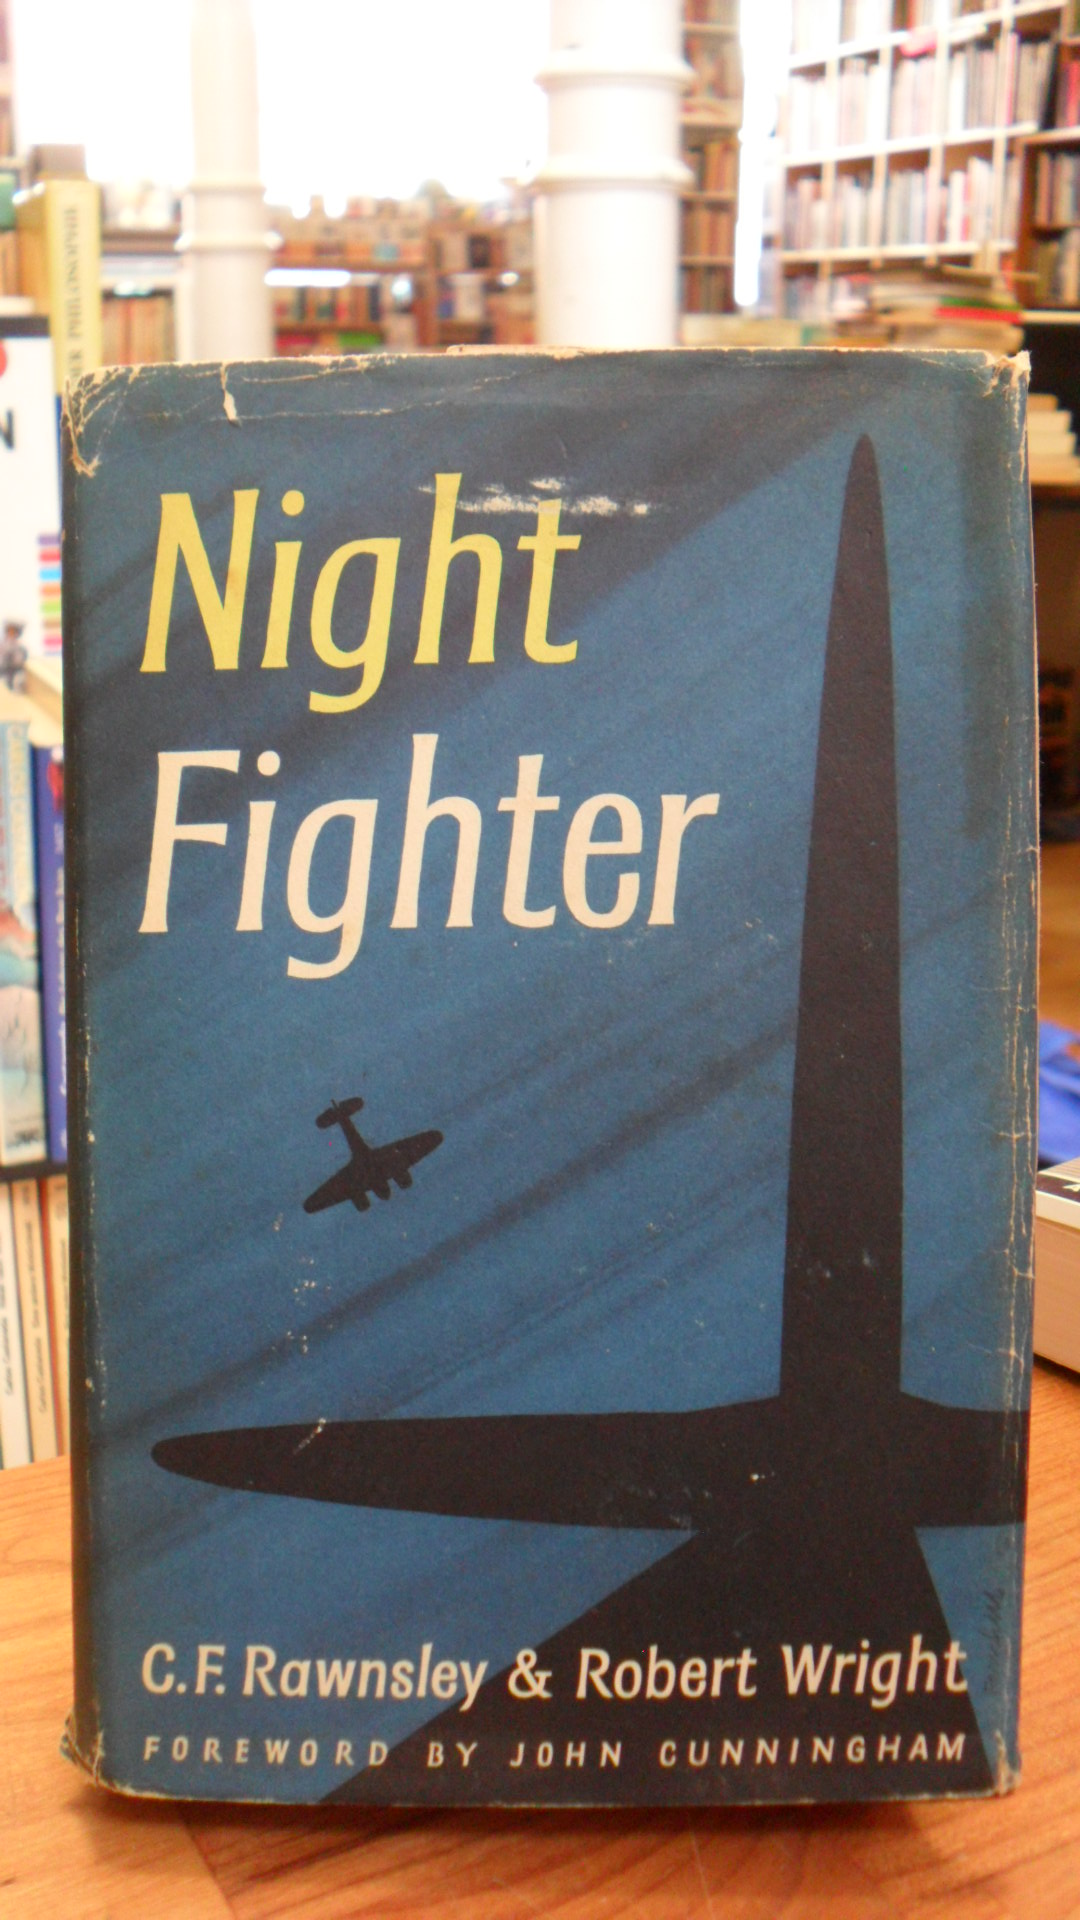 Rawnsley, Nightfighter – Foreword by John Cunningham,